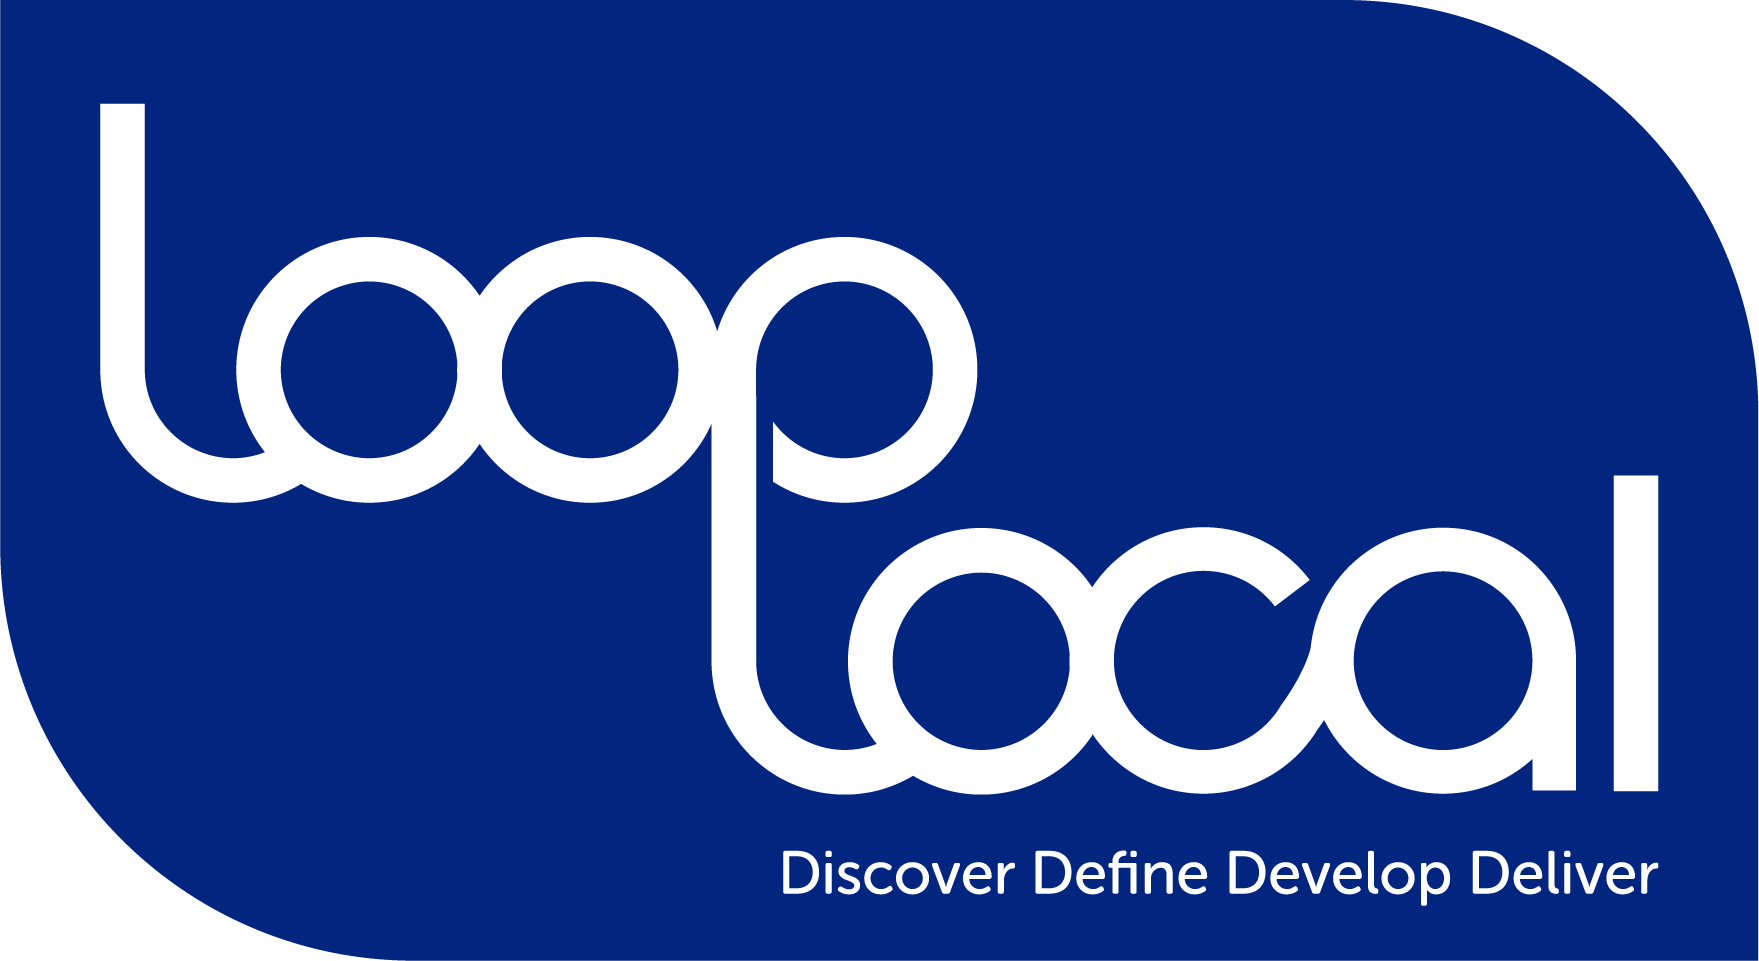 Loop Local